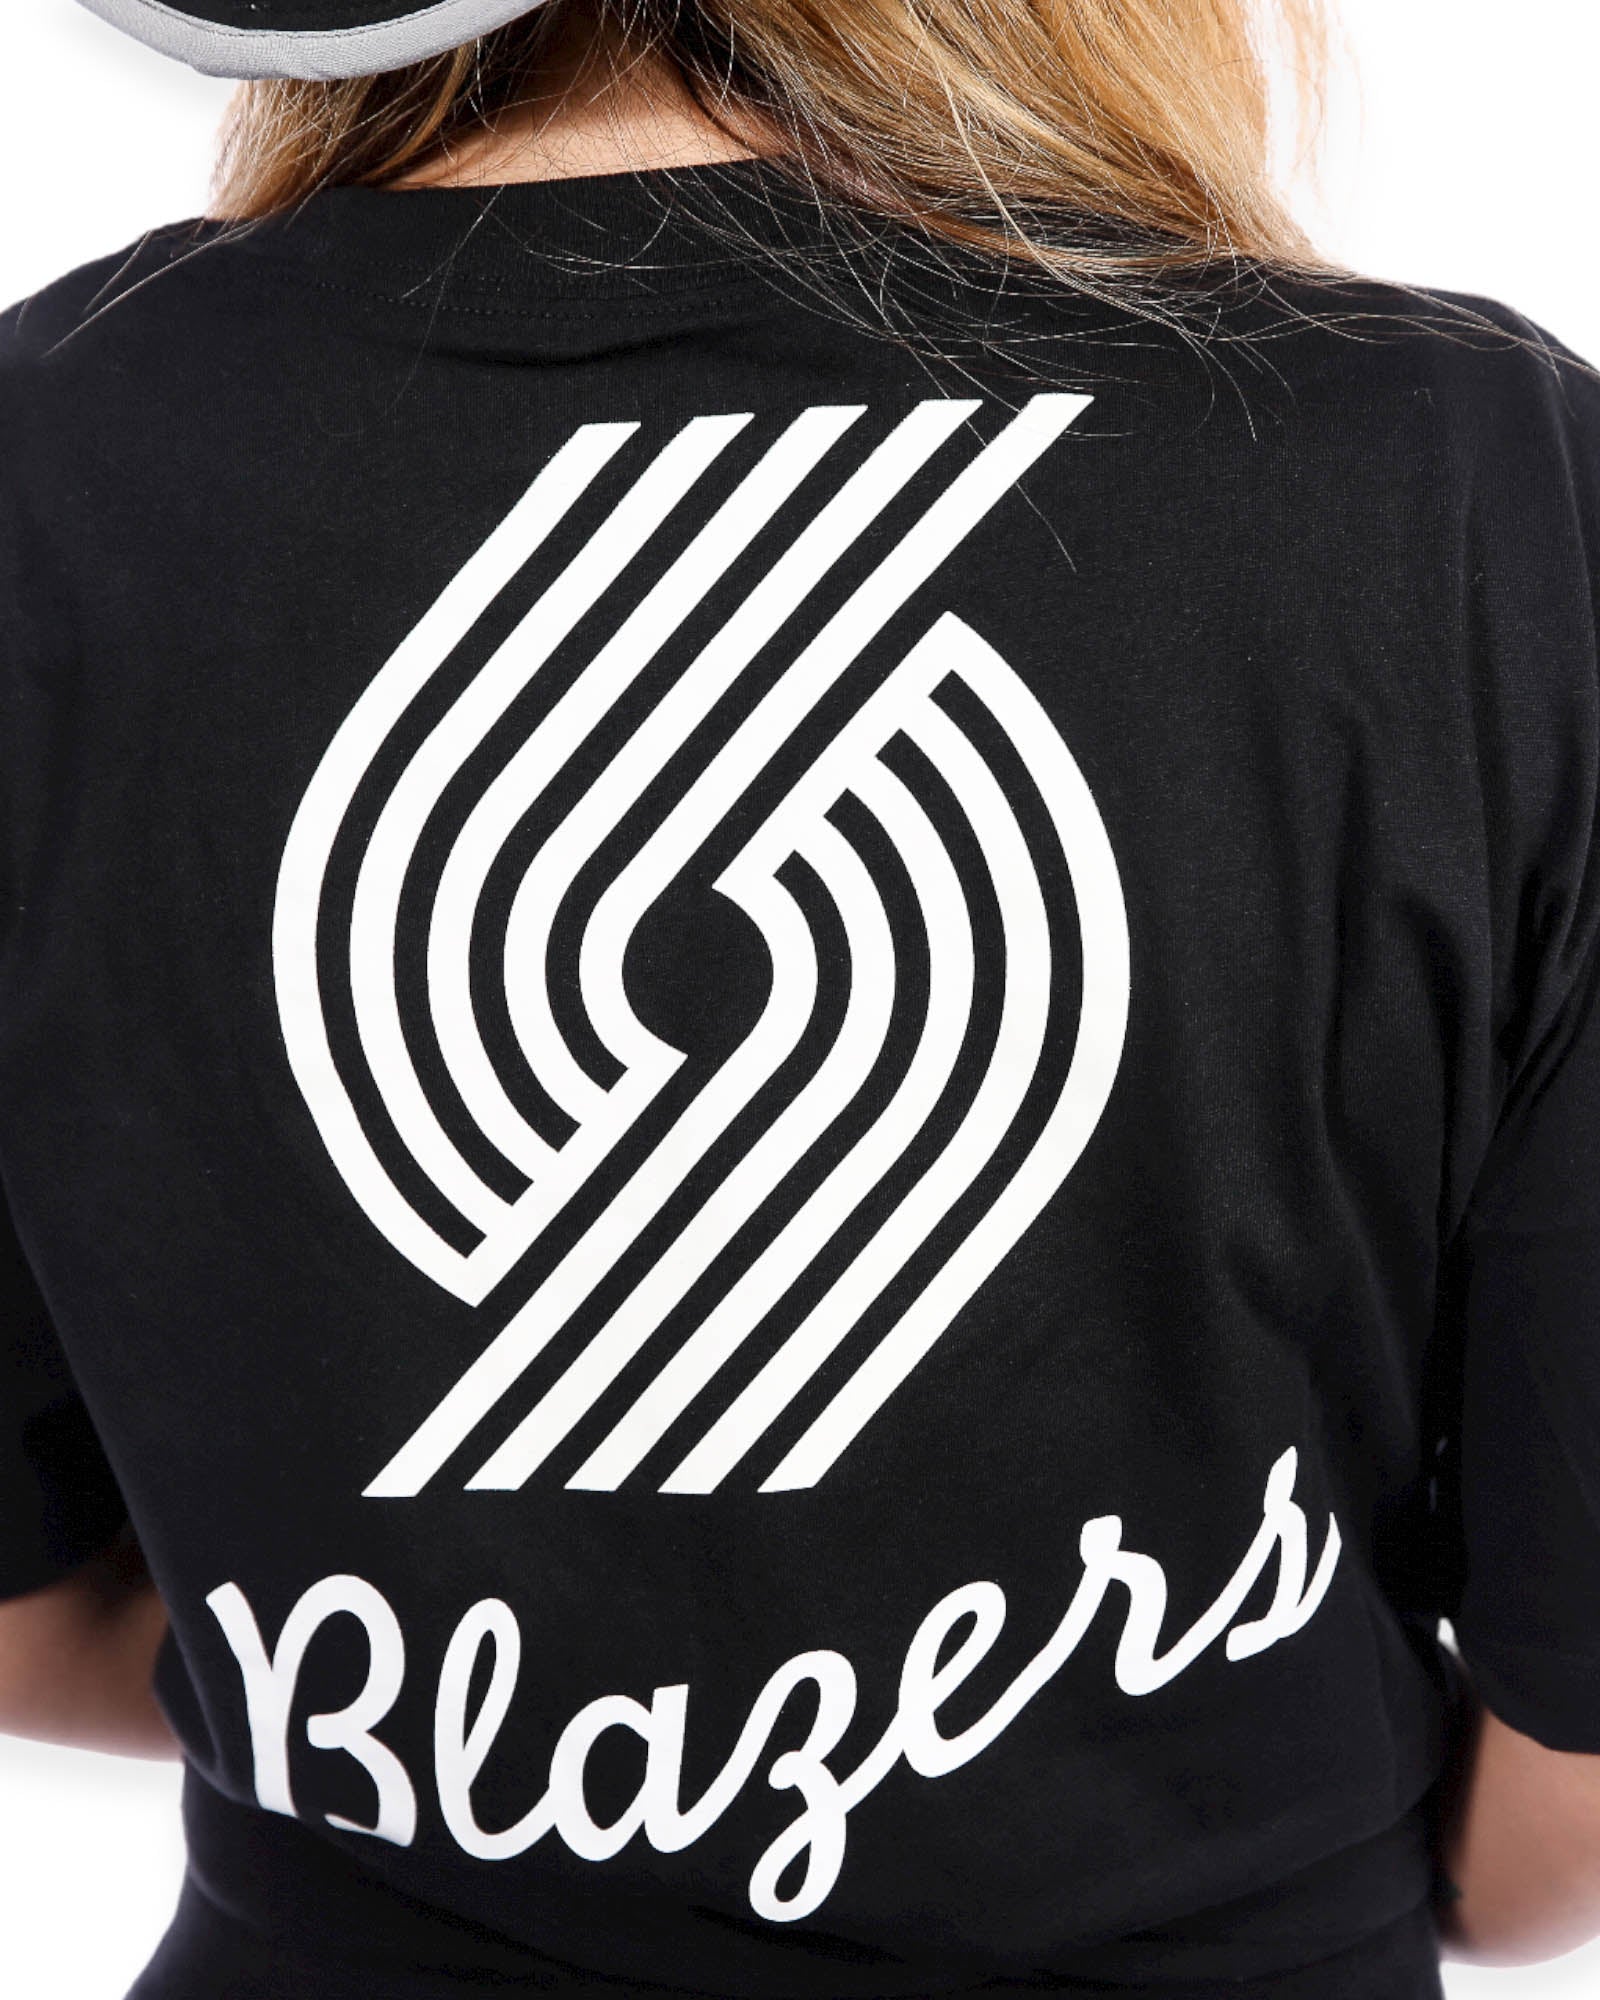 Portland Trail Blazers Women's Nike Courtside T-Shirt